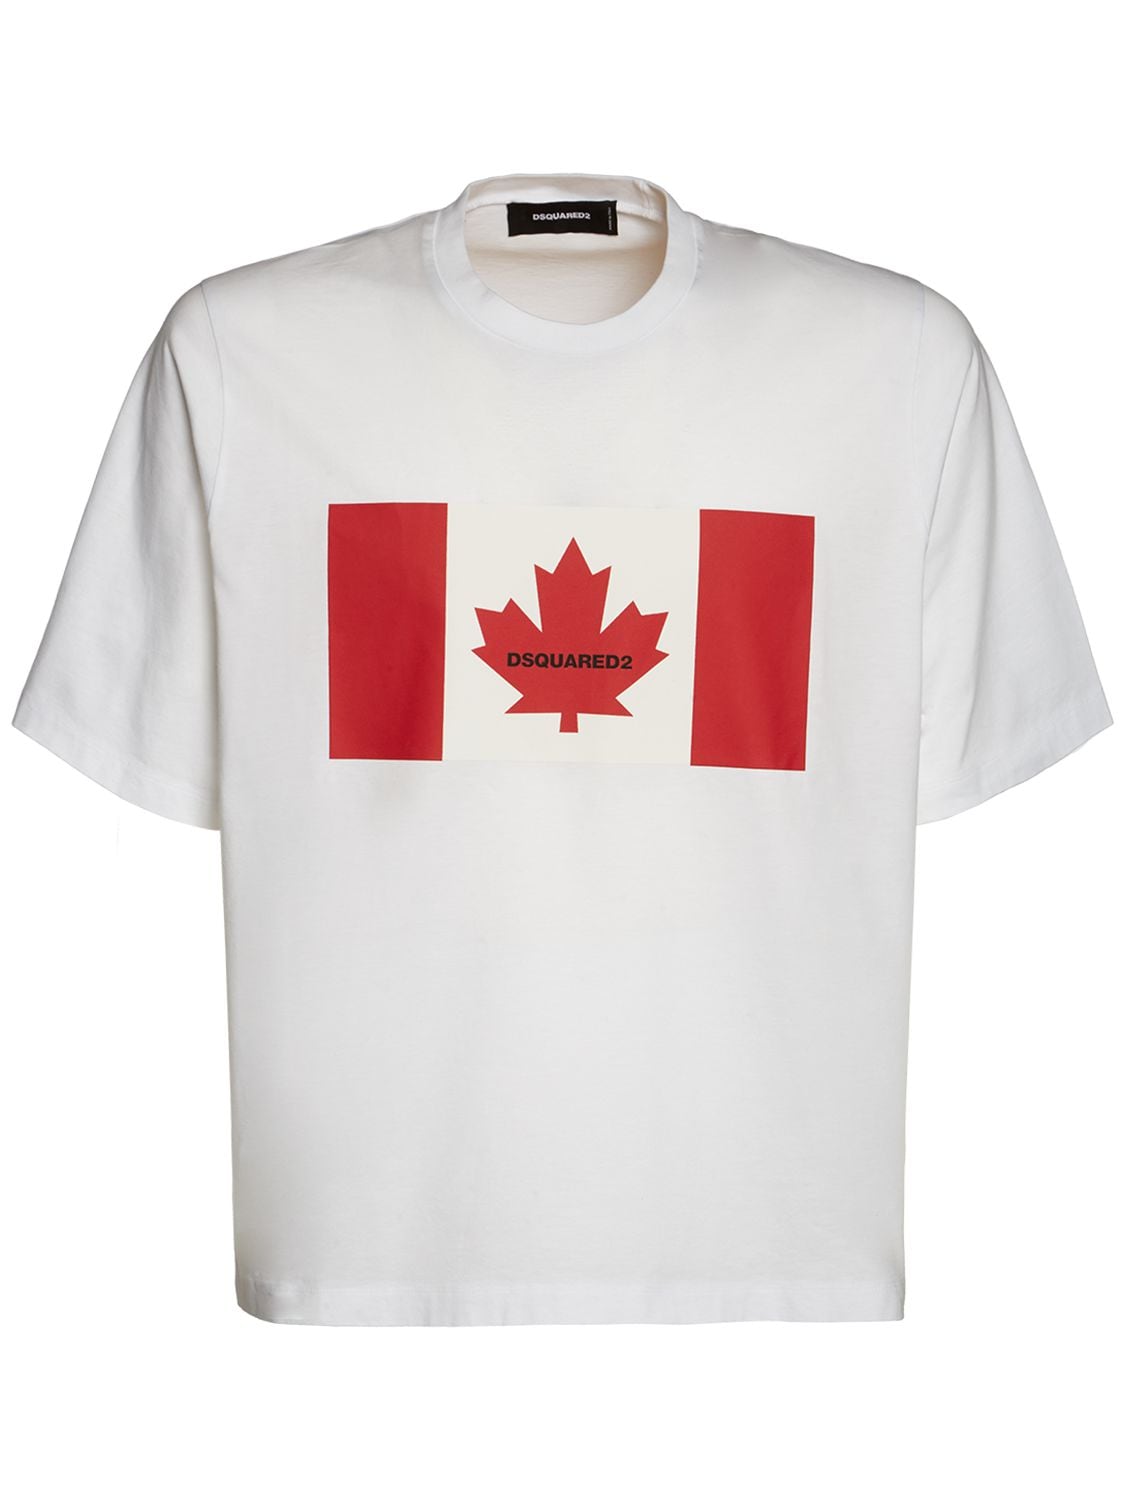 Dsquared2 Flag Print Cotton Jersey T-shirt White | ModeSens